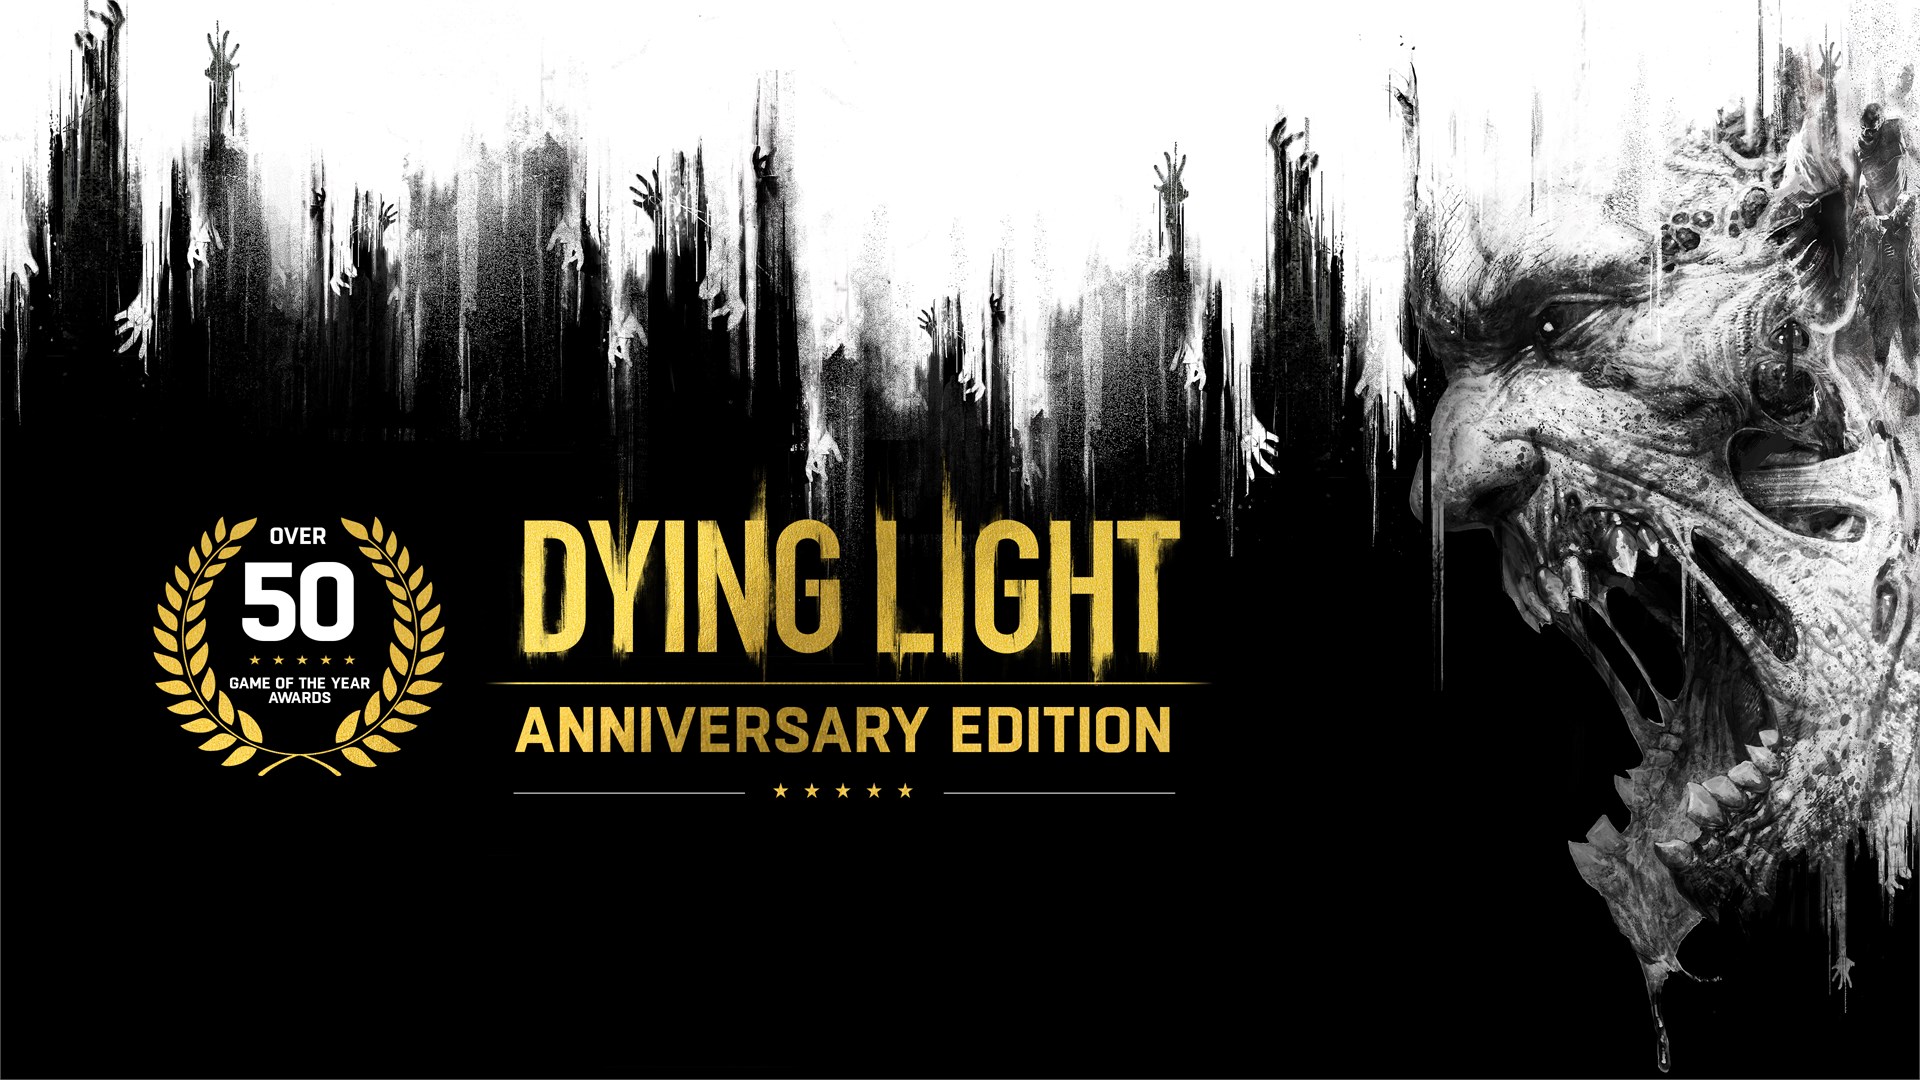 dying light enhanced edition xbox one digital code